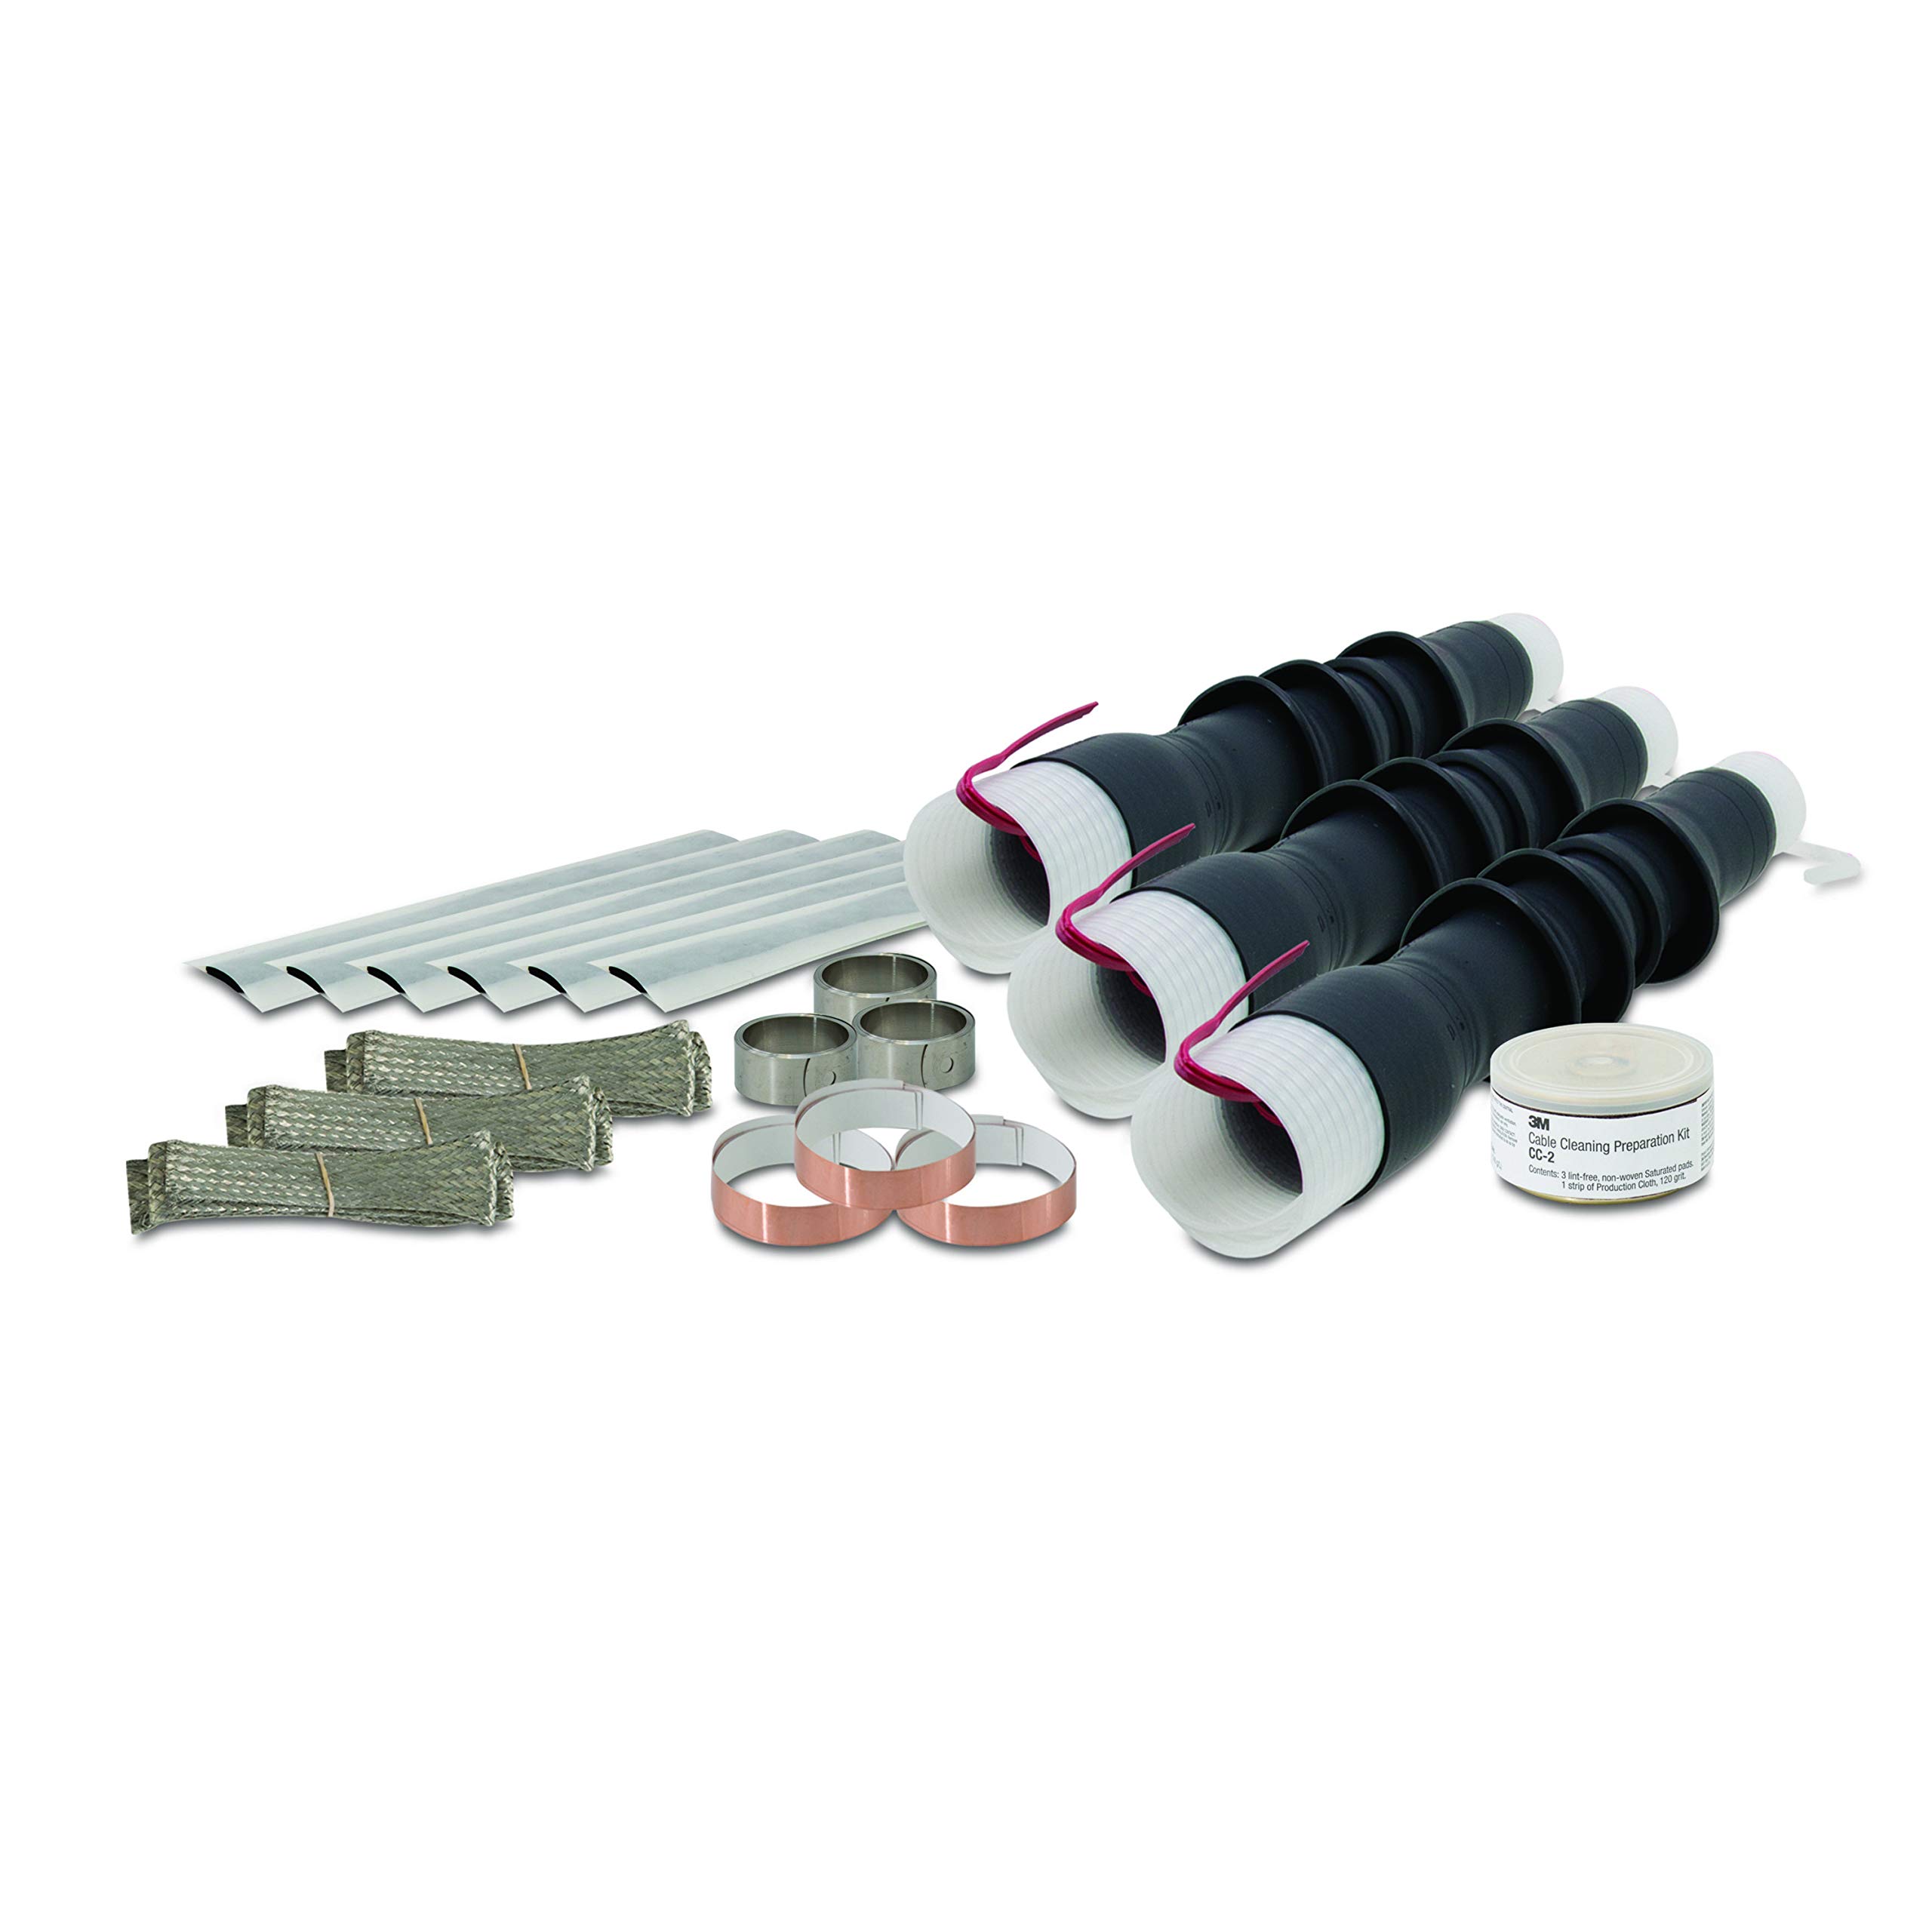 Cold Shrink QT-III 3/C Termination Kit 7625-T-110-3G, Tape Shielded, 5-15 kV, Insulation OD 1.18-1.51 in, 3/kit